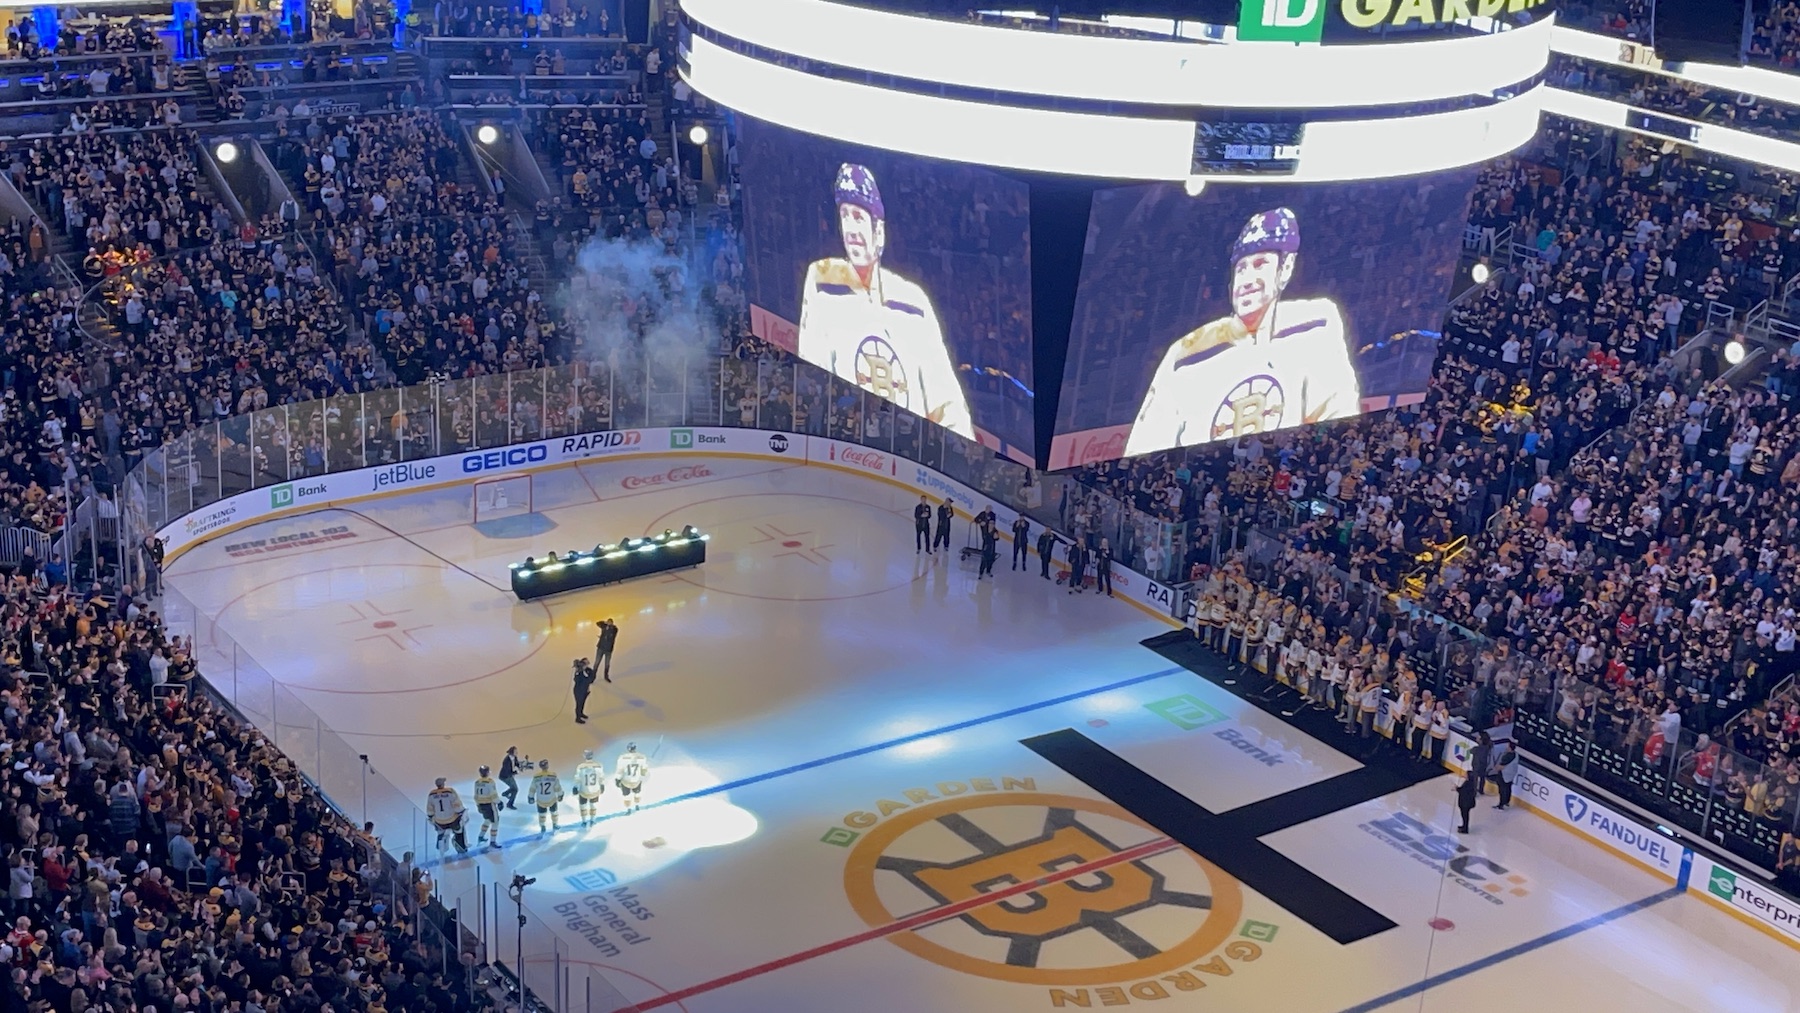 Bruins celebrate centennial season with special pregame ceremony